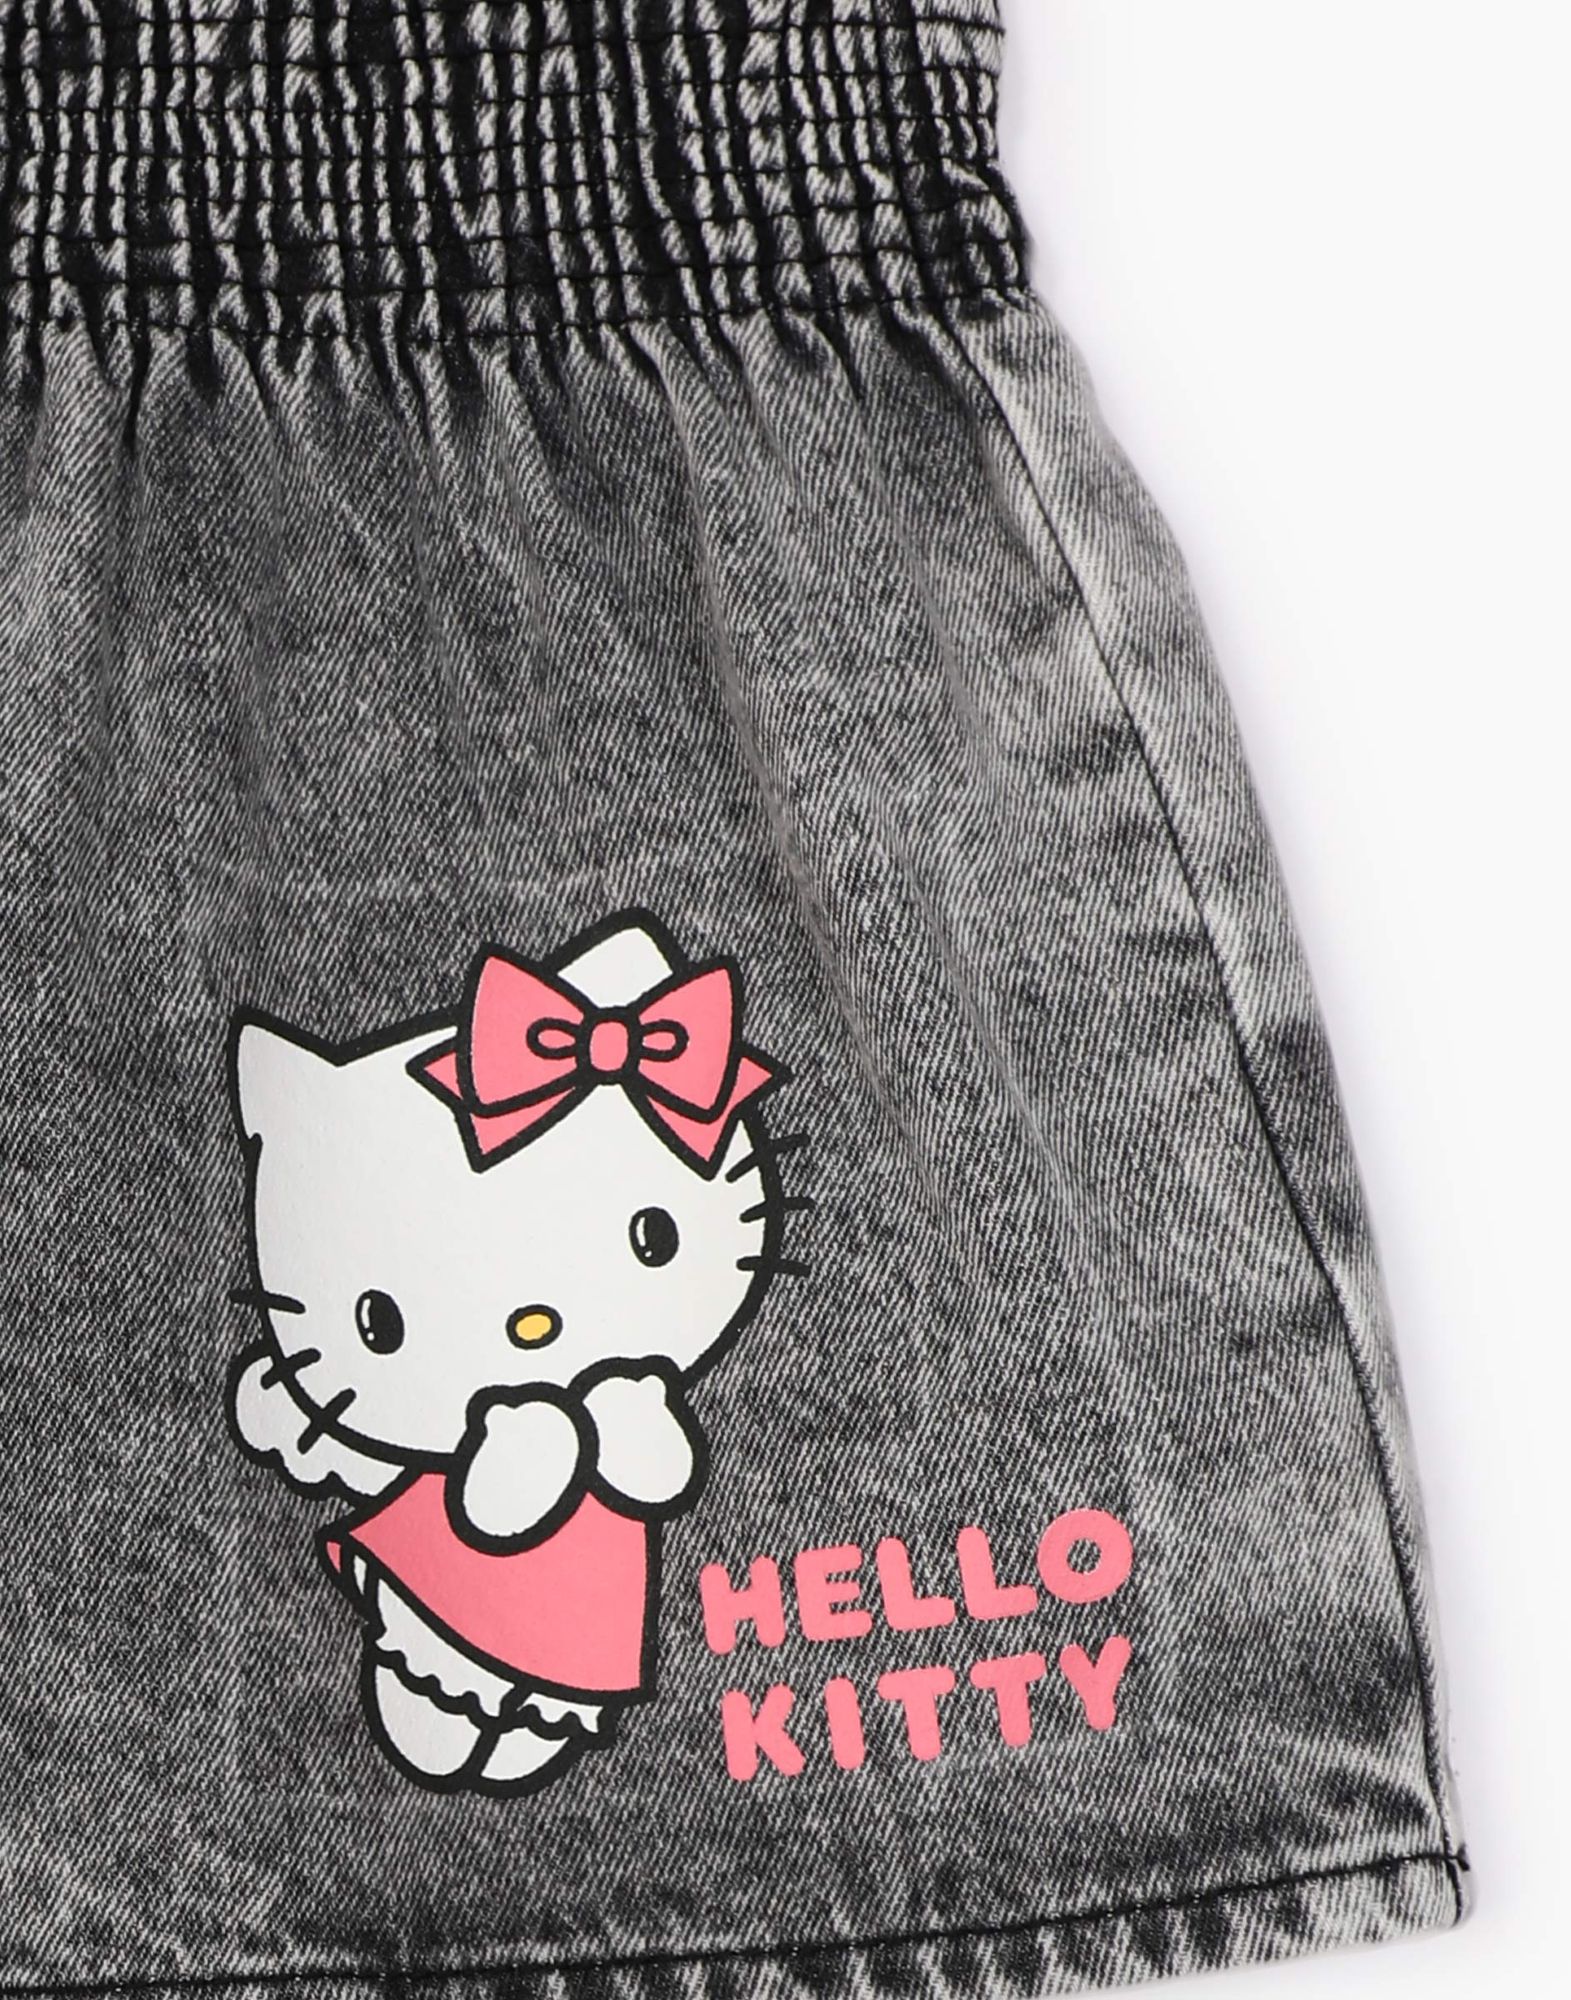 Серая юбка из коллекции Hello Kitty для девочки-3